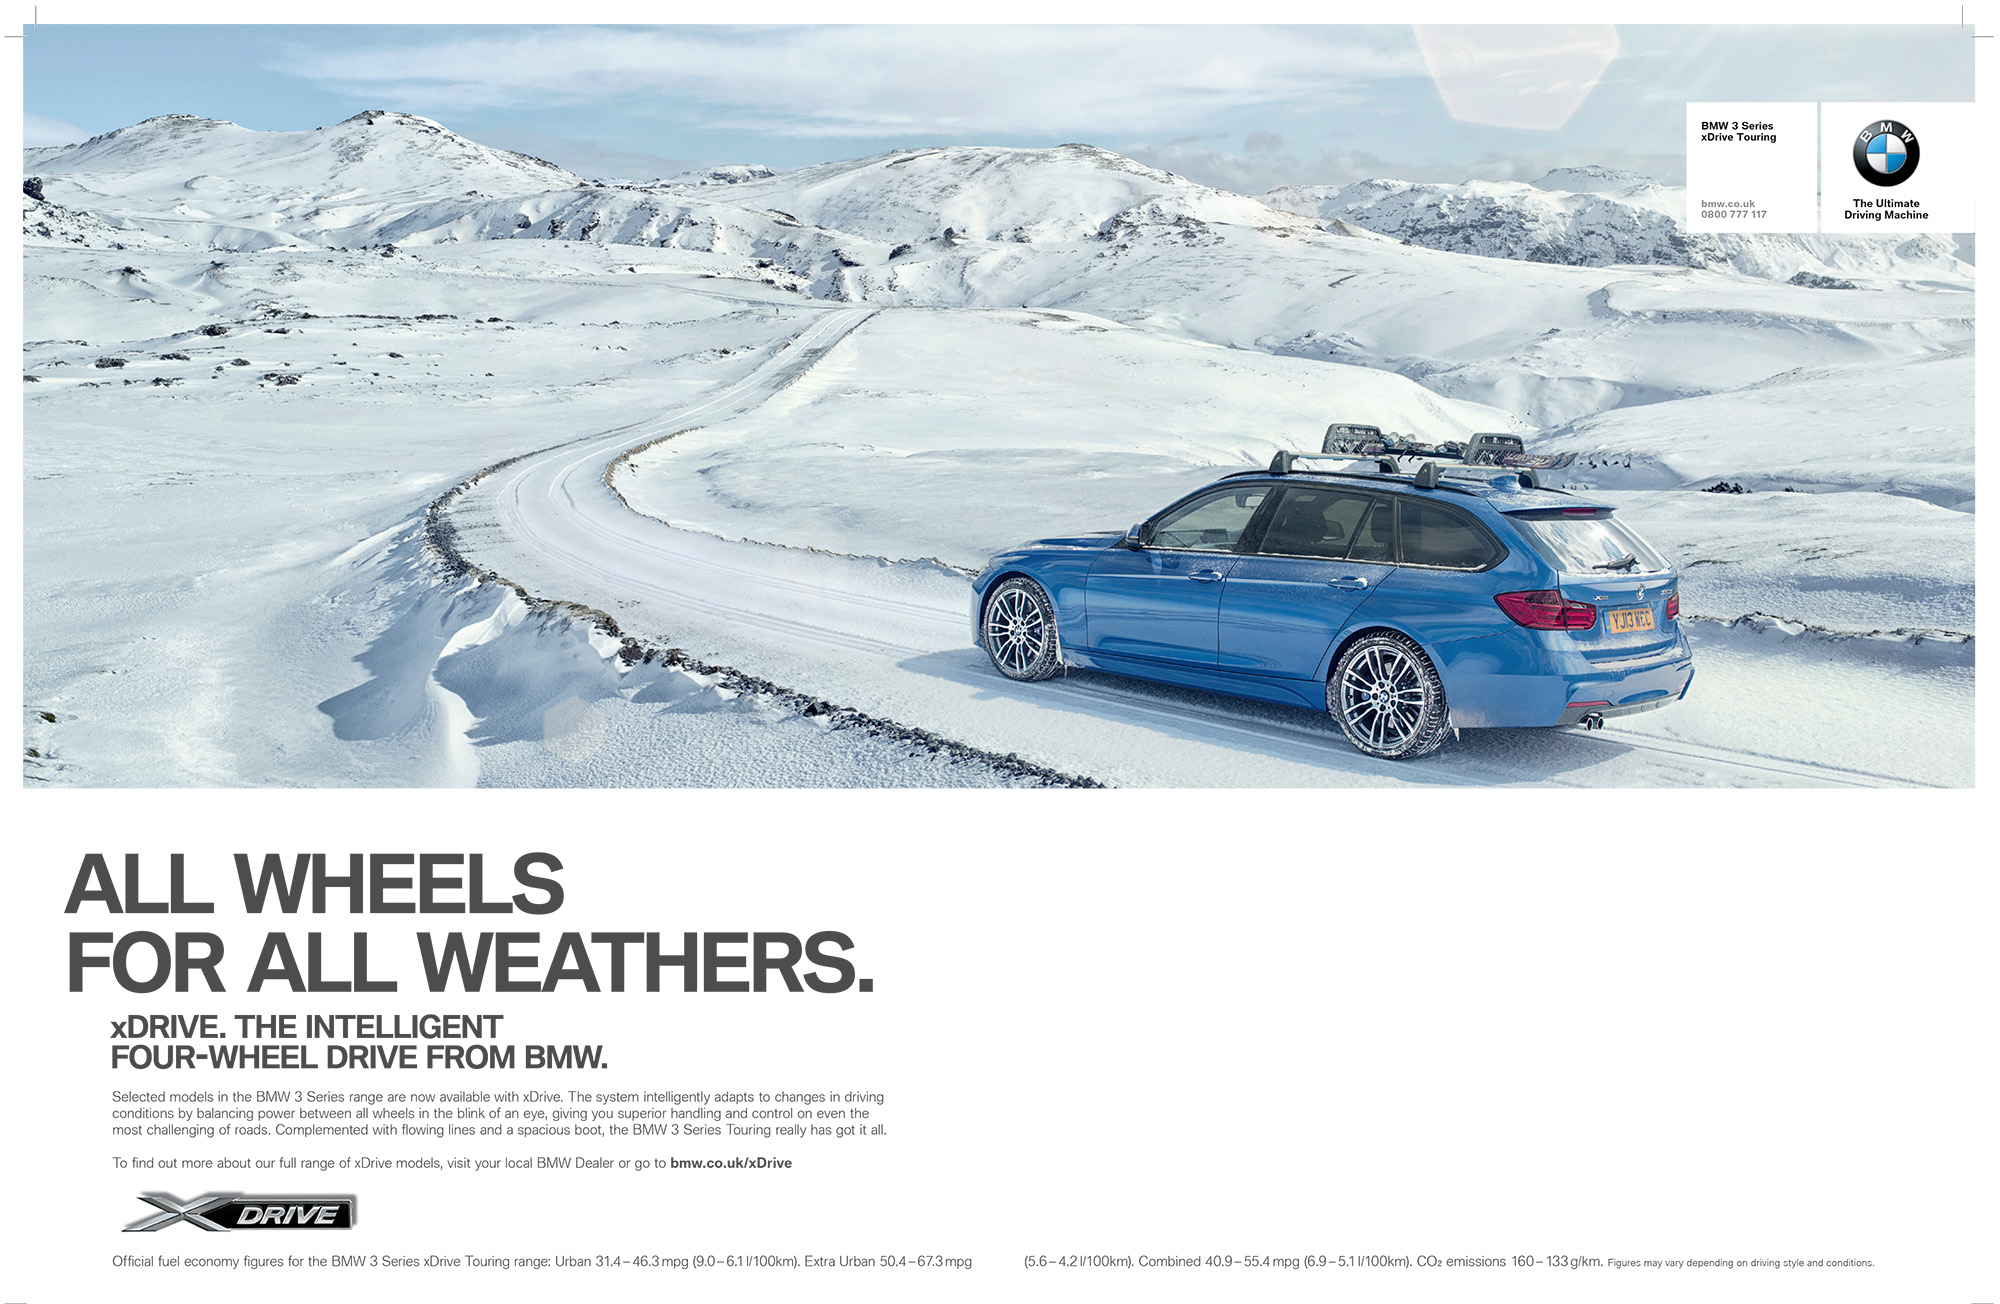 Marketing Localization example: BMW USA marketing campaign